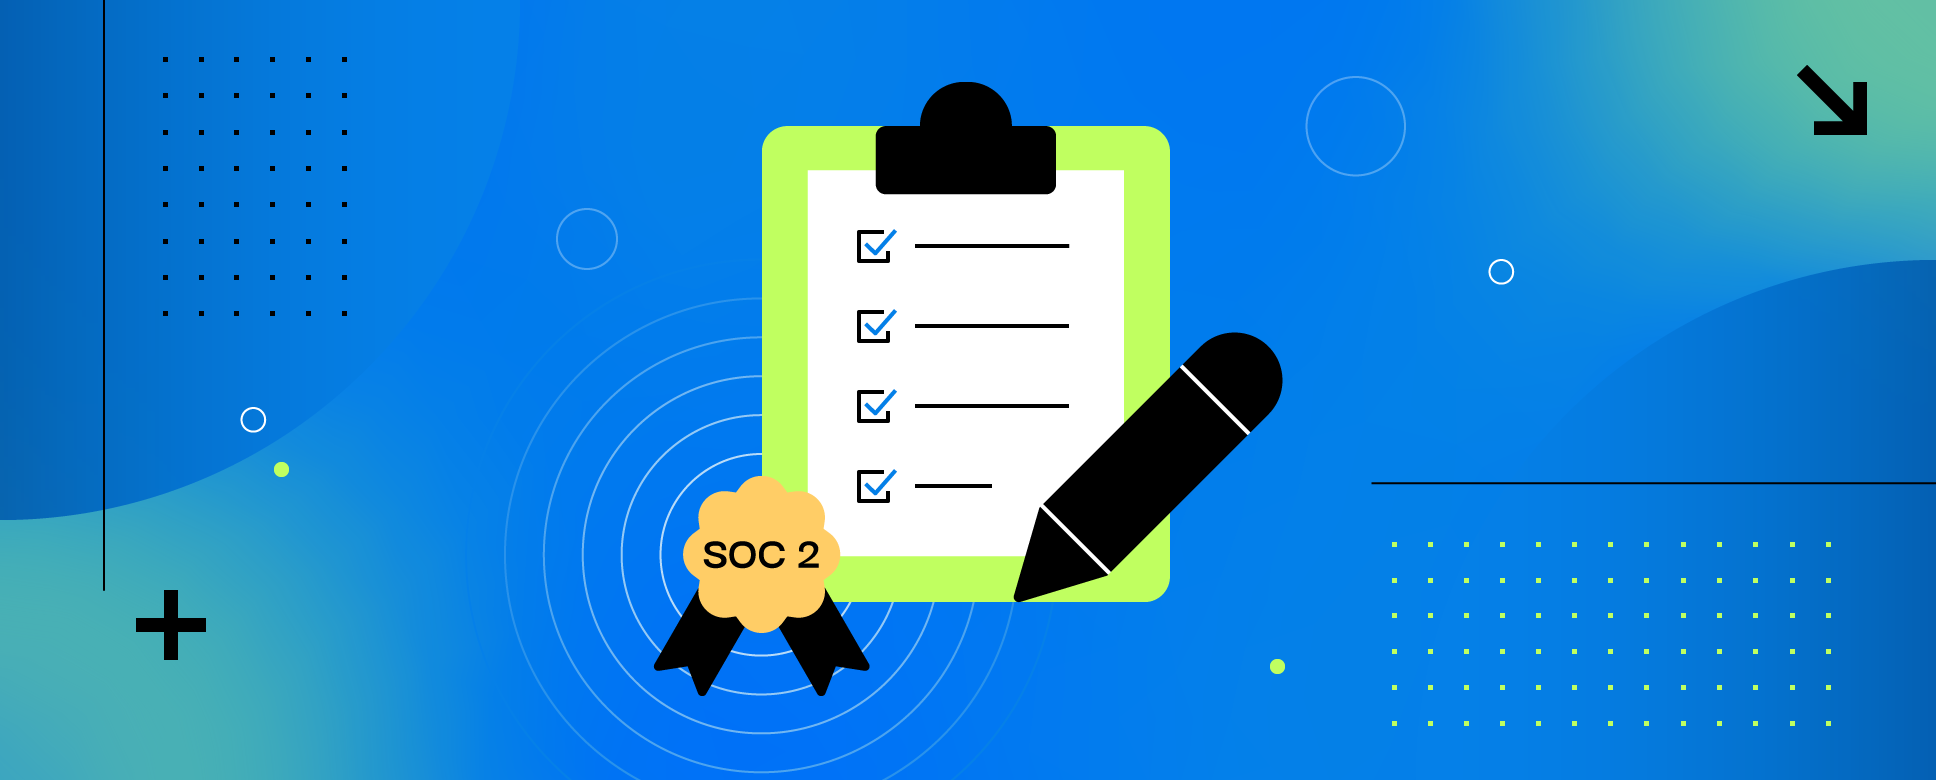 SOC 2 Compliance Checklist hero image